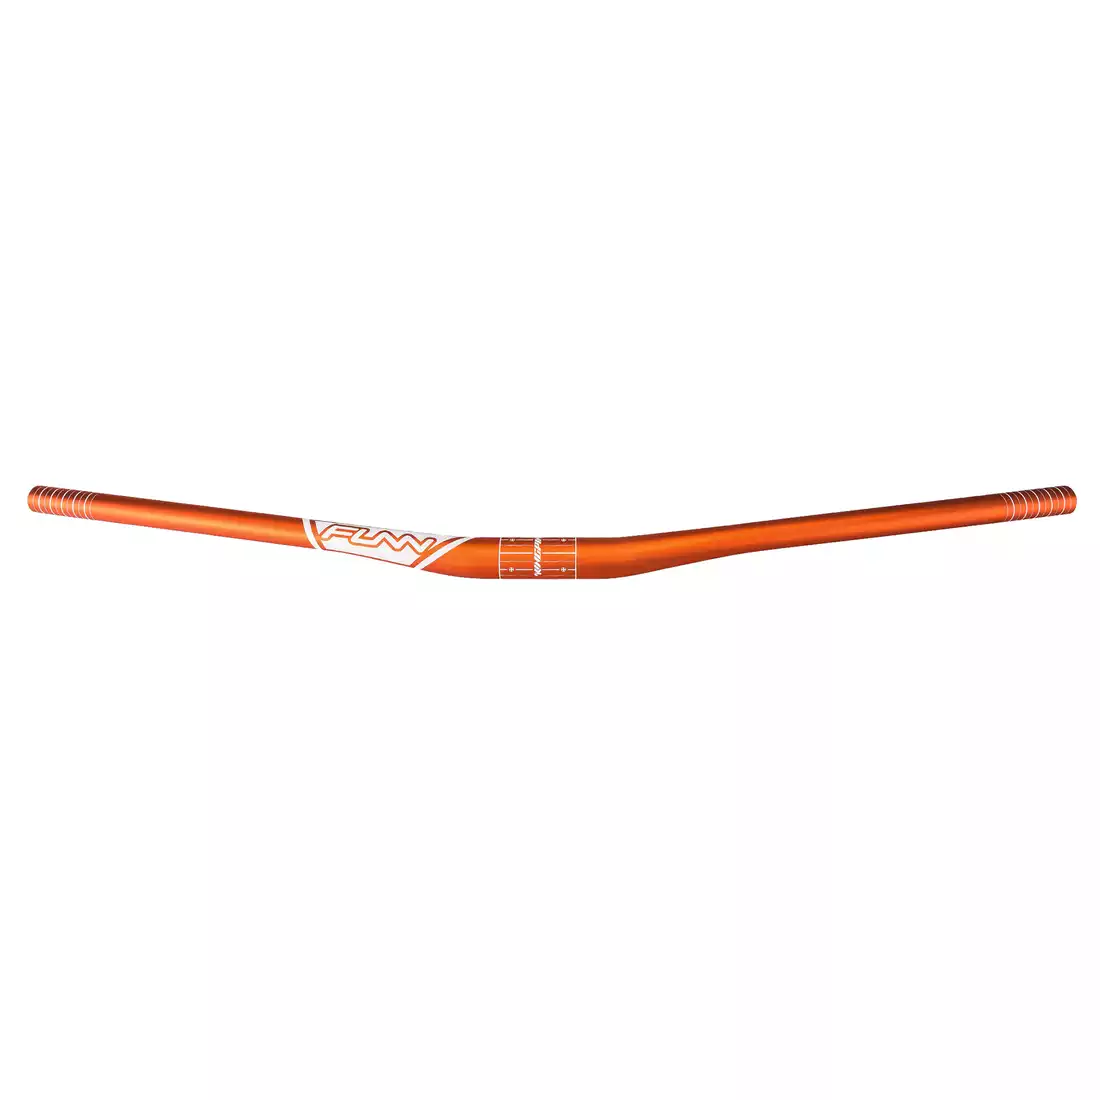 FUNN KINGPIN 810/31,8/15 mm Bicycle handlebars Orange